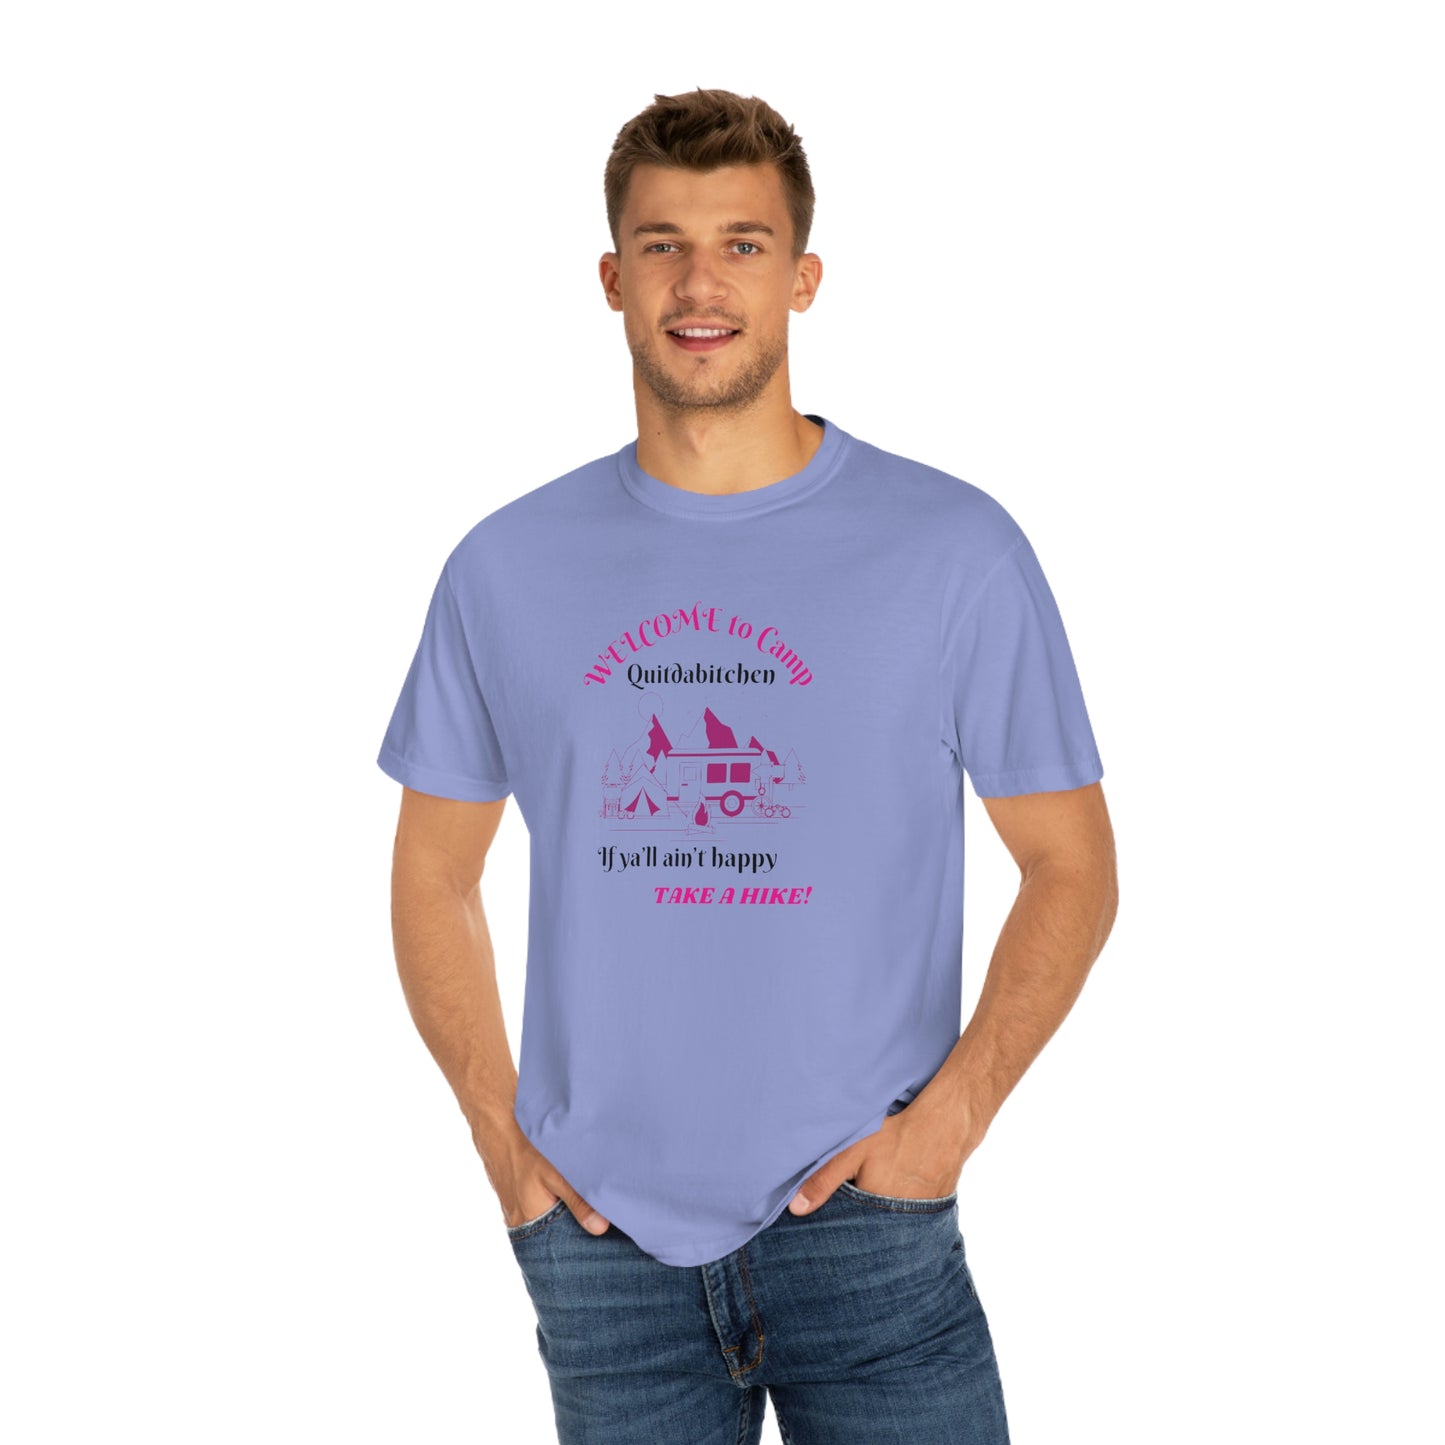 Camiseta unisex teñida en prenda